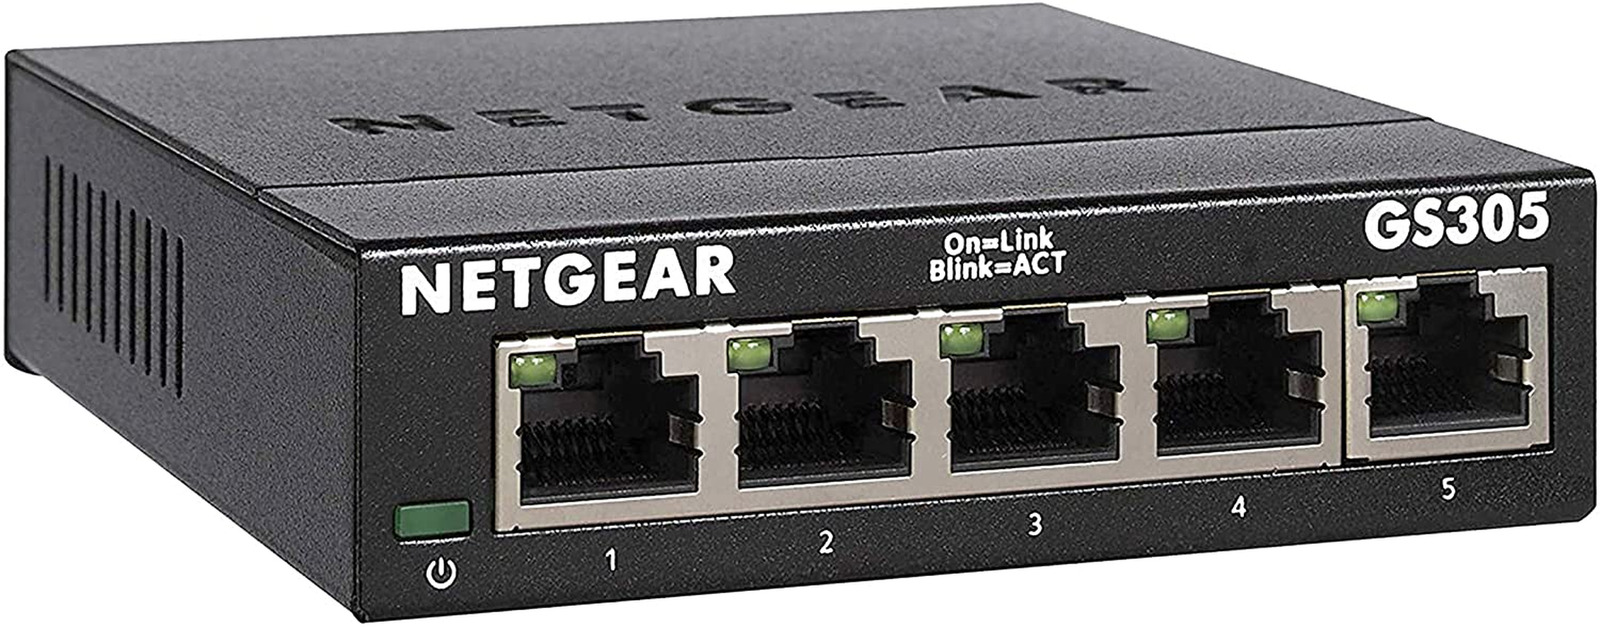 NETGEAR 5-Port Gigabit Ethernet Unmanaged Switch (GS305) - Home Network Hub, Off